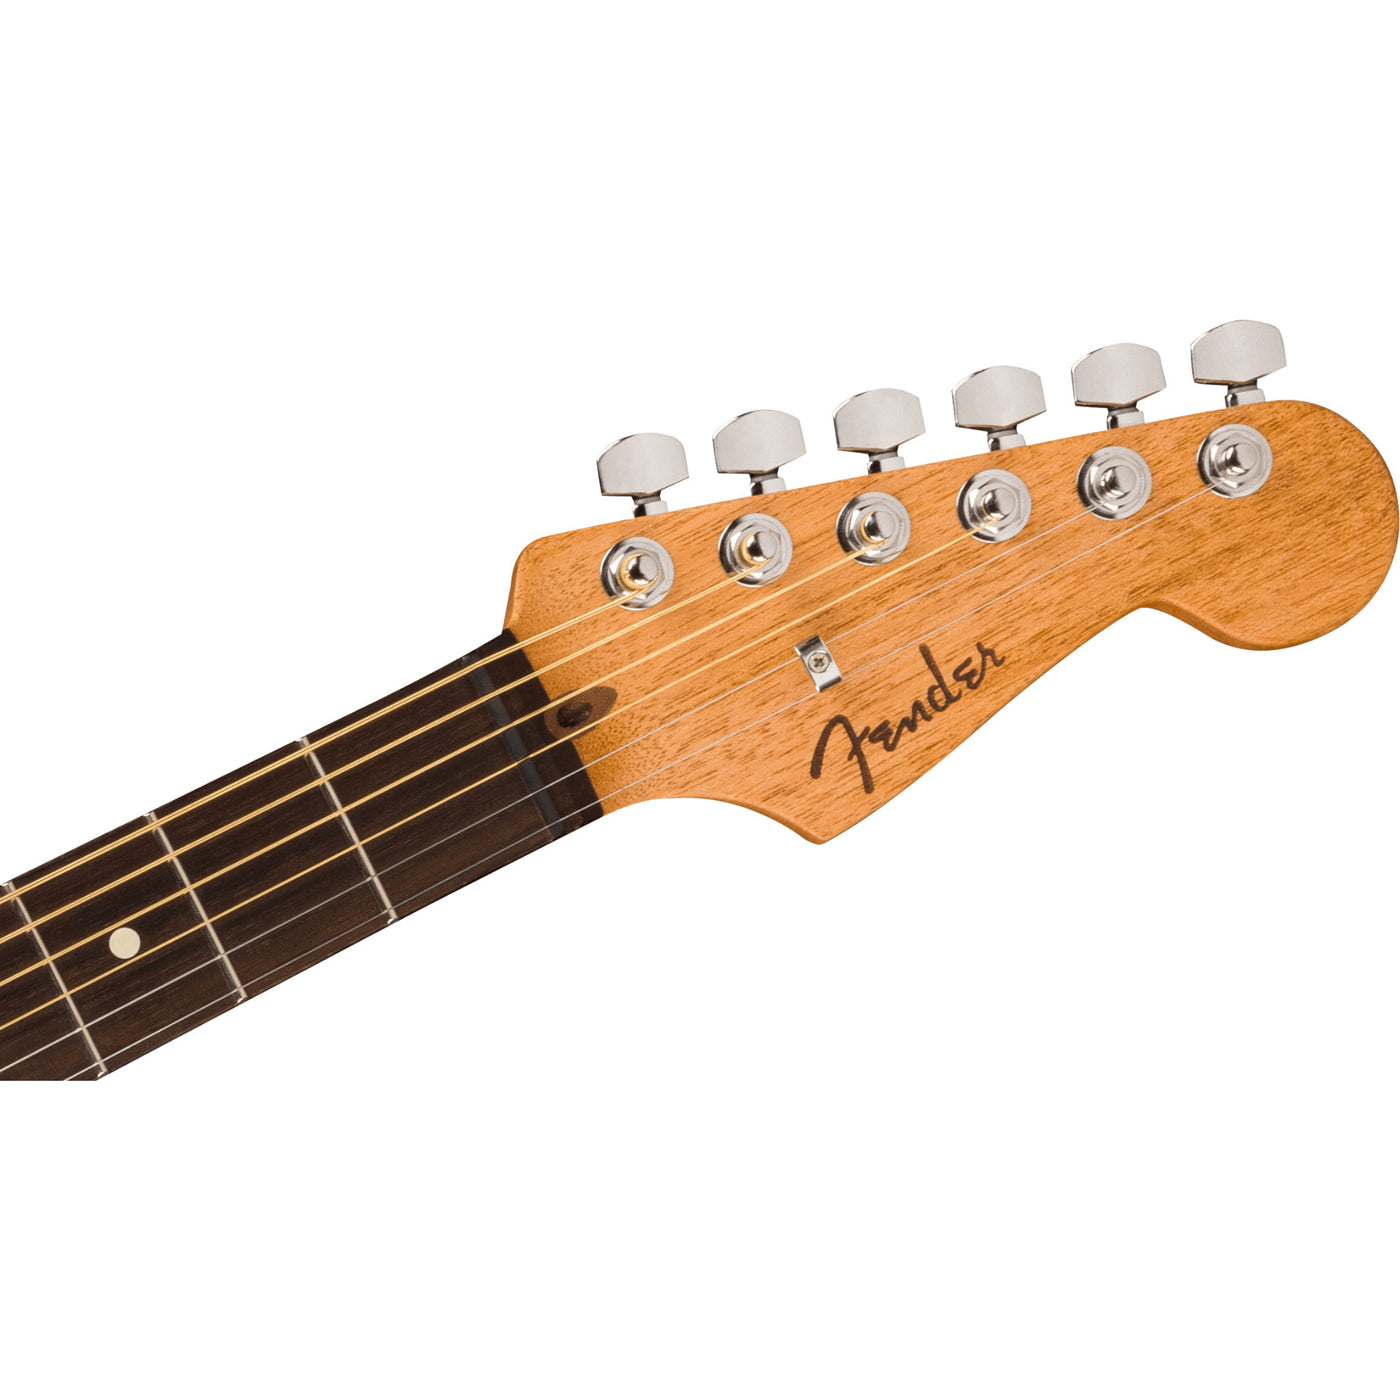 Fender Acoustasonic Player Jazzmaster Electric Guitar, Ice Blue (0972233183)